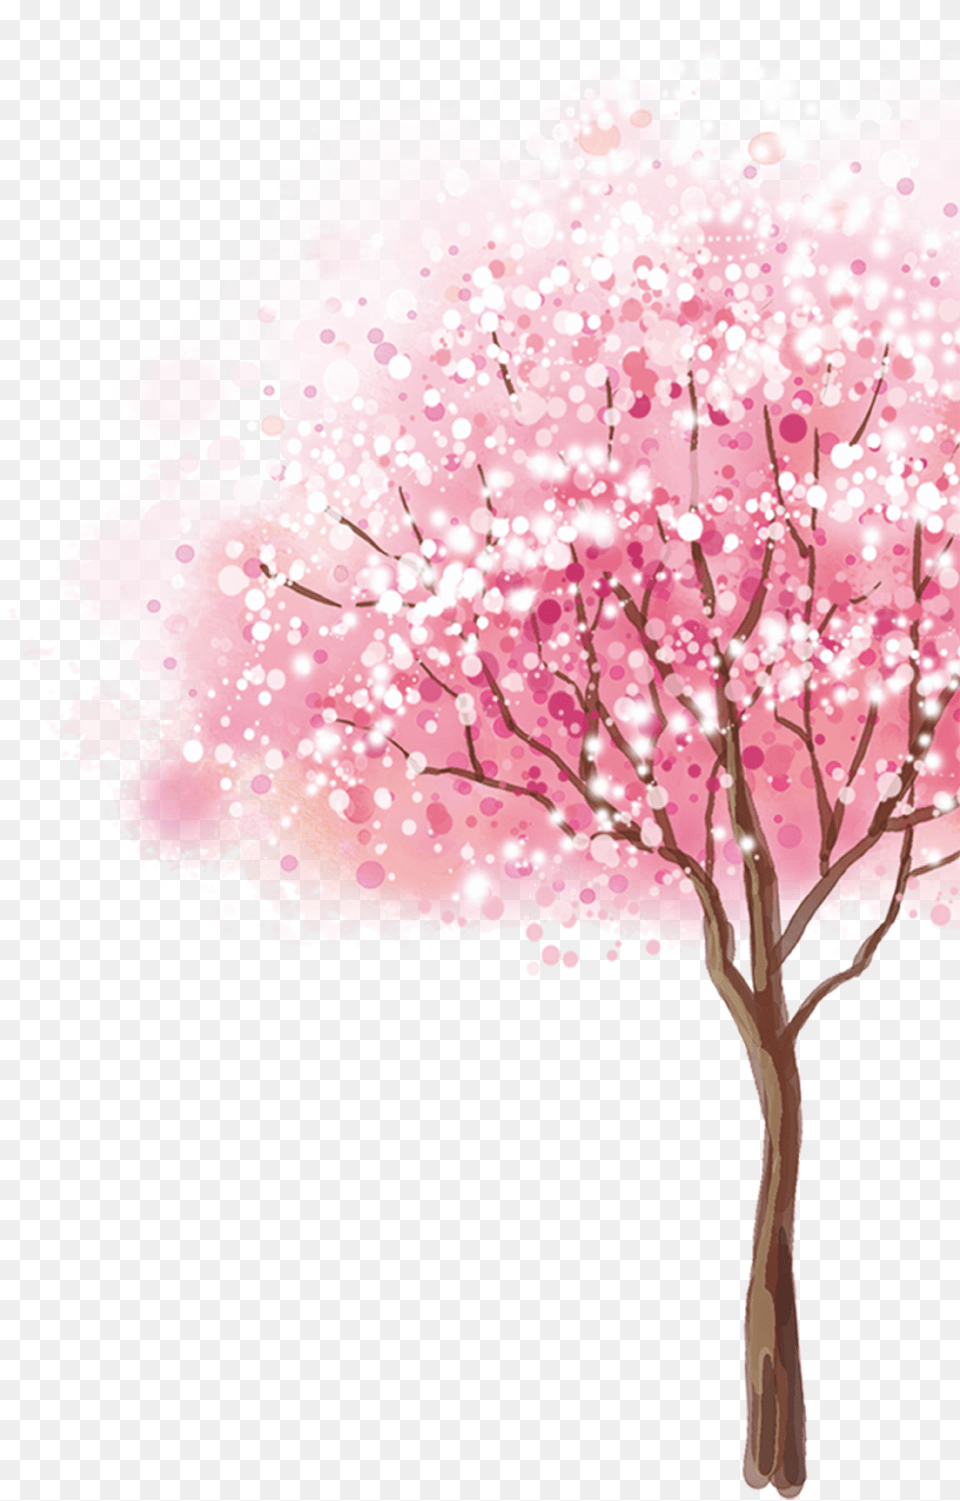 Cherryblossom Tree Cherry Blossom Tree Transparent Background, Flower, Plant, Cherry Blossom Png Image